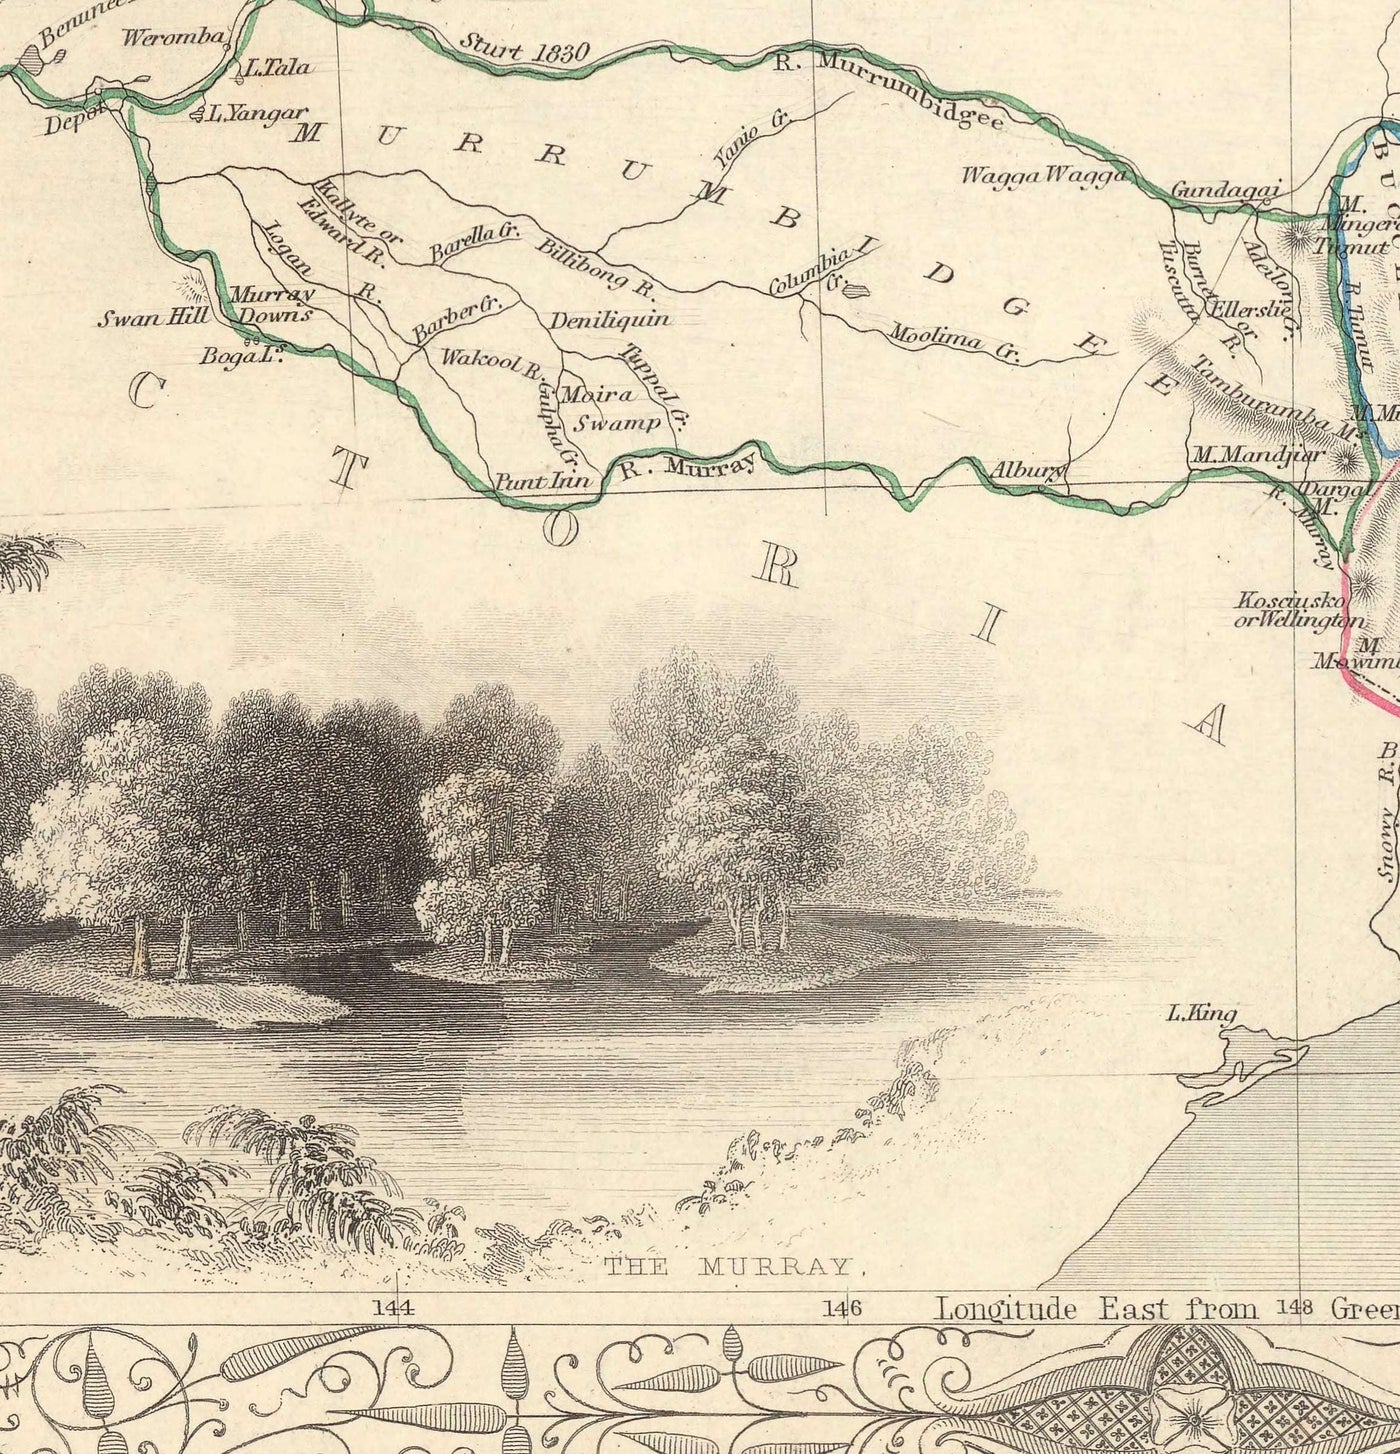 Old Map of New South Wales, Australia 1851 by Tallis & Rapkin - Sydney, Newcastle, Brisbane, Botany Bay, NSW Counties